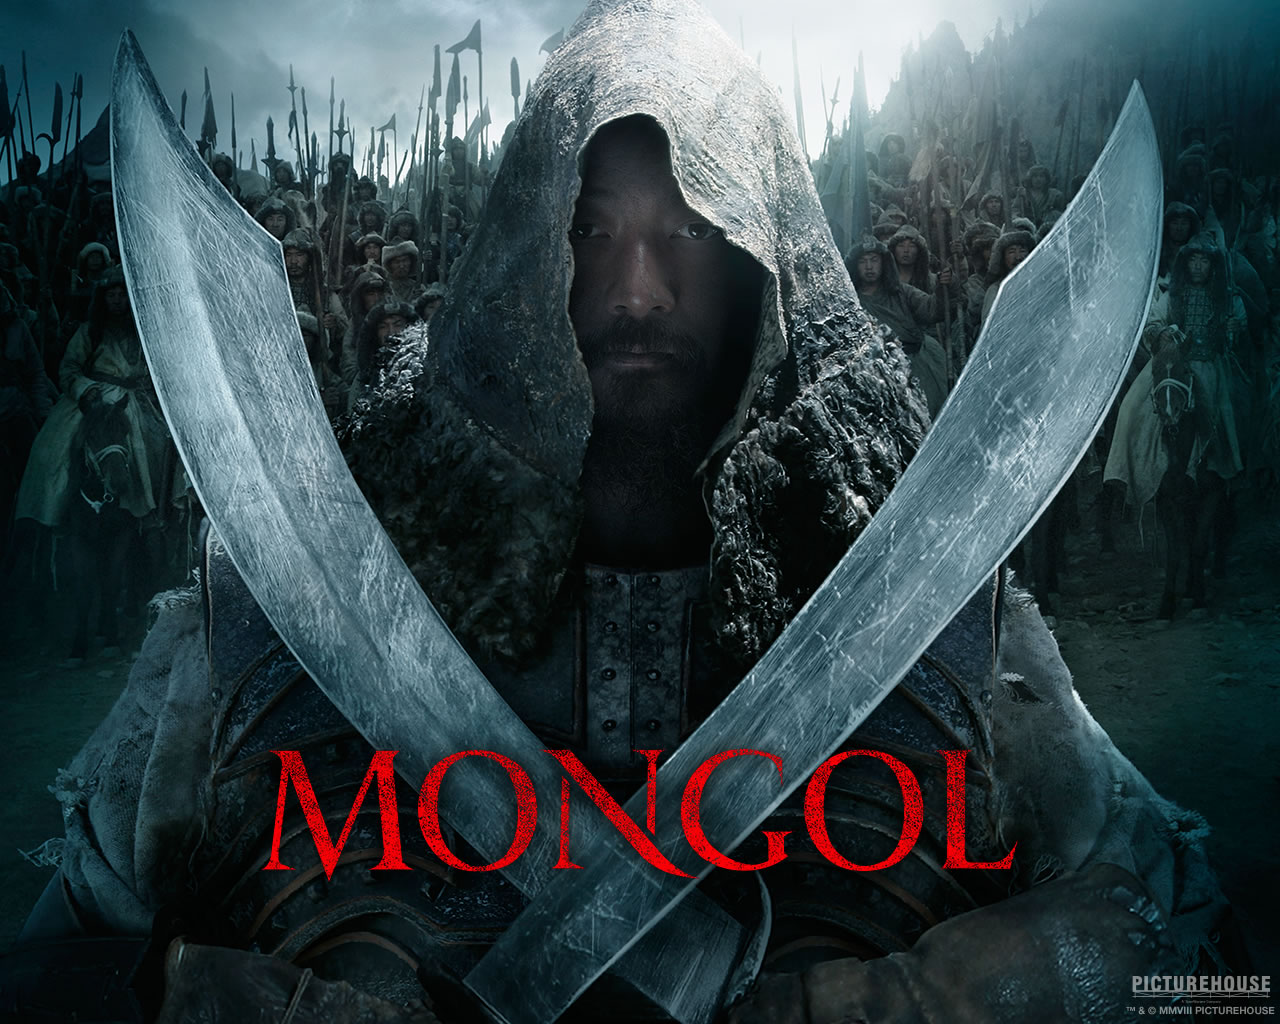 https://www.blackgate.com/wp-content/uploads/2010/08/mongol-sword2.jpg